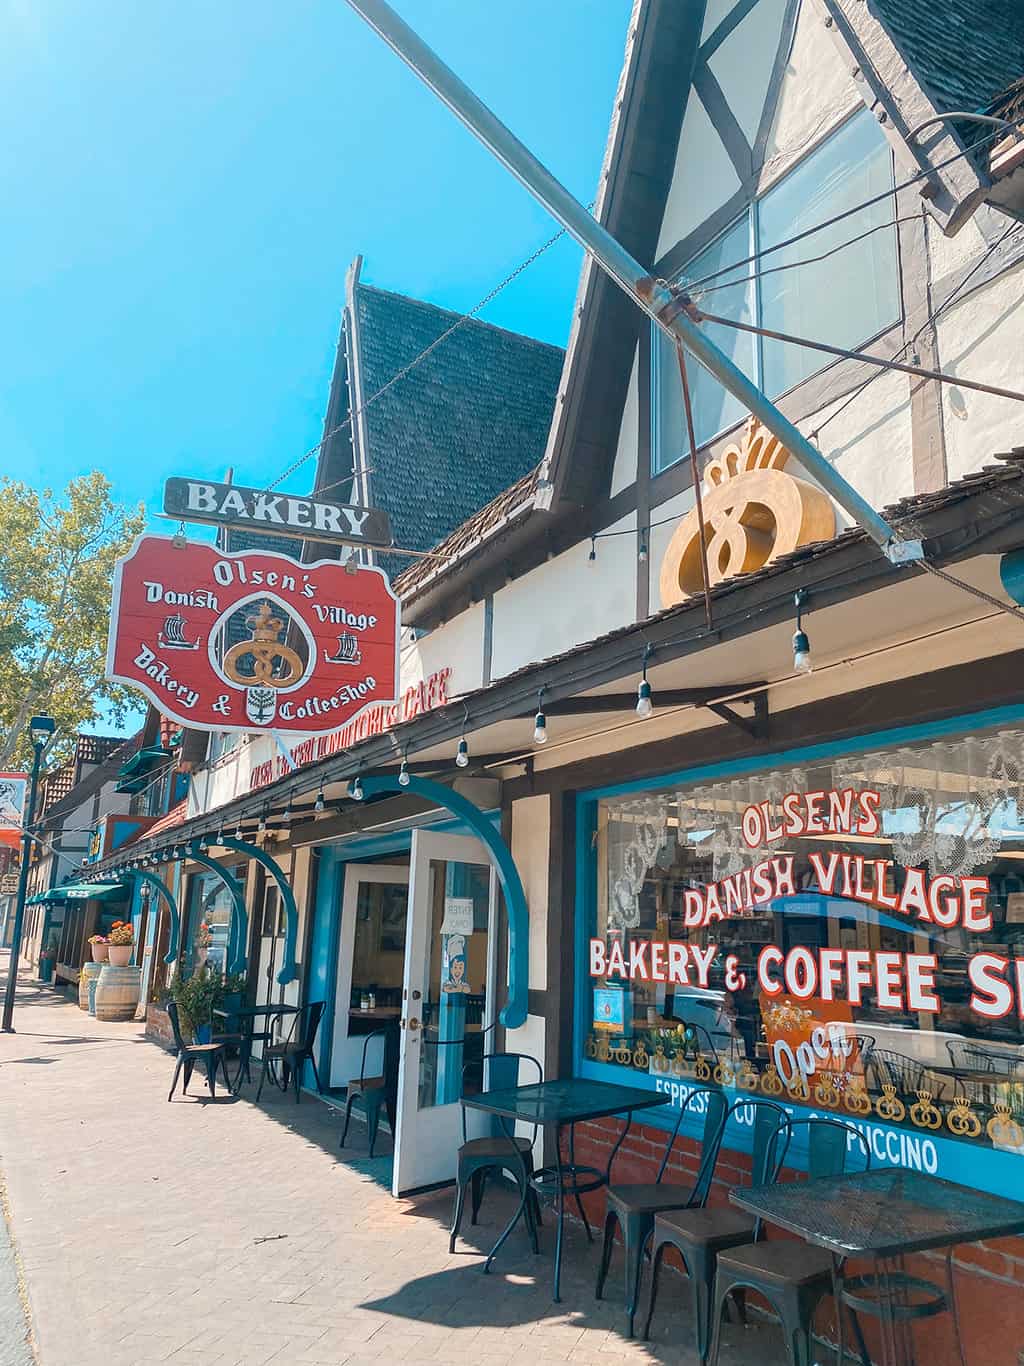 Olsens Danish Village Bakery and Coffee Shop in Solvang California - credit Keryn Means of Twist Travel Magazine